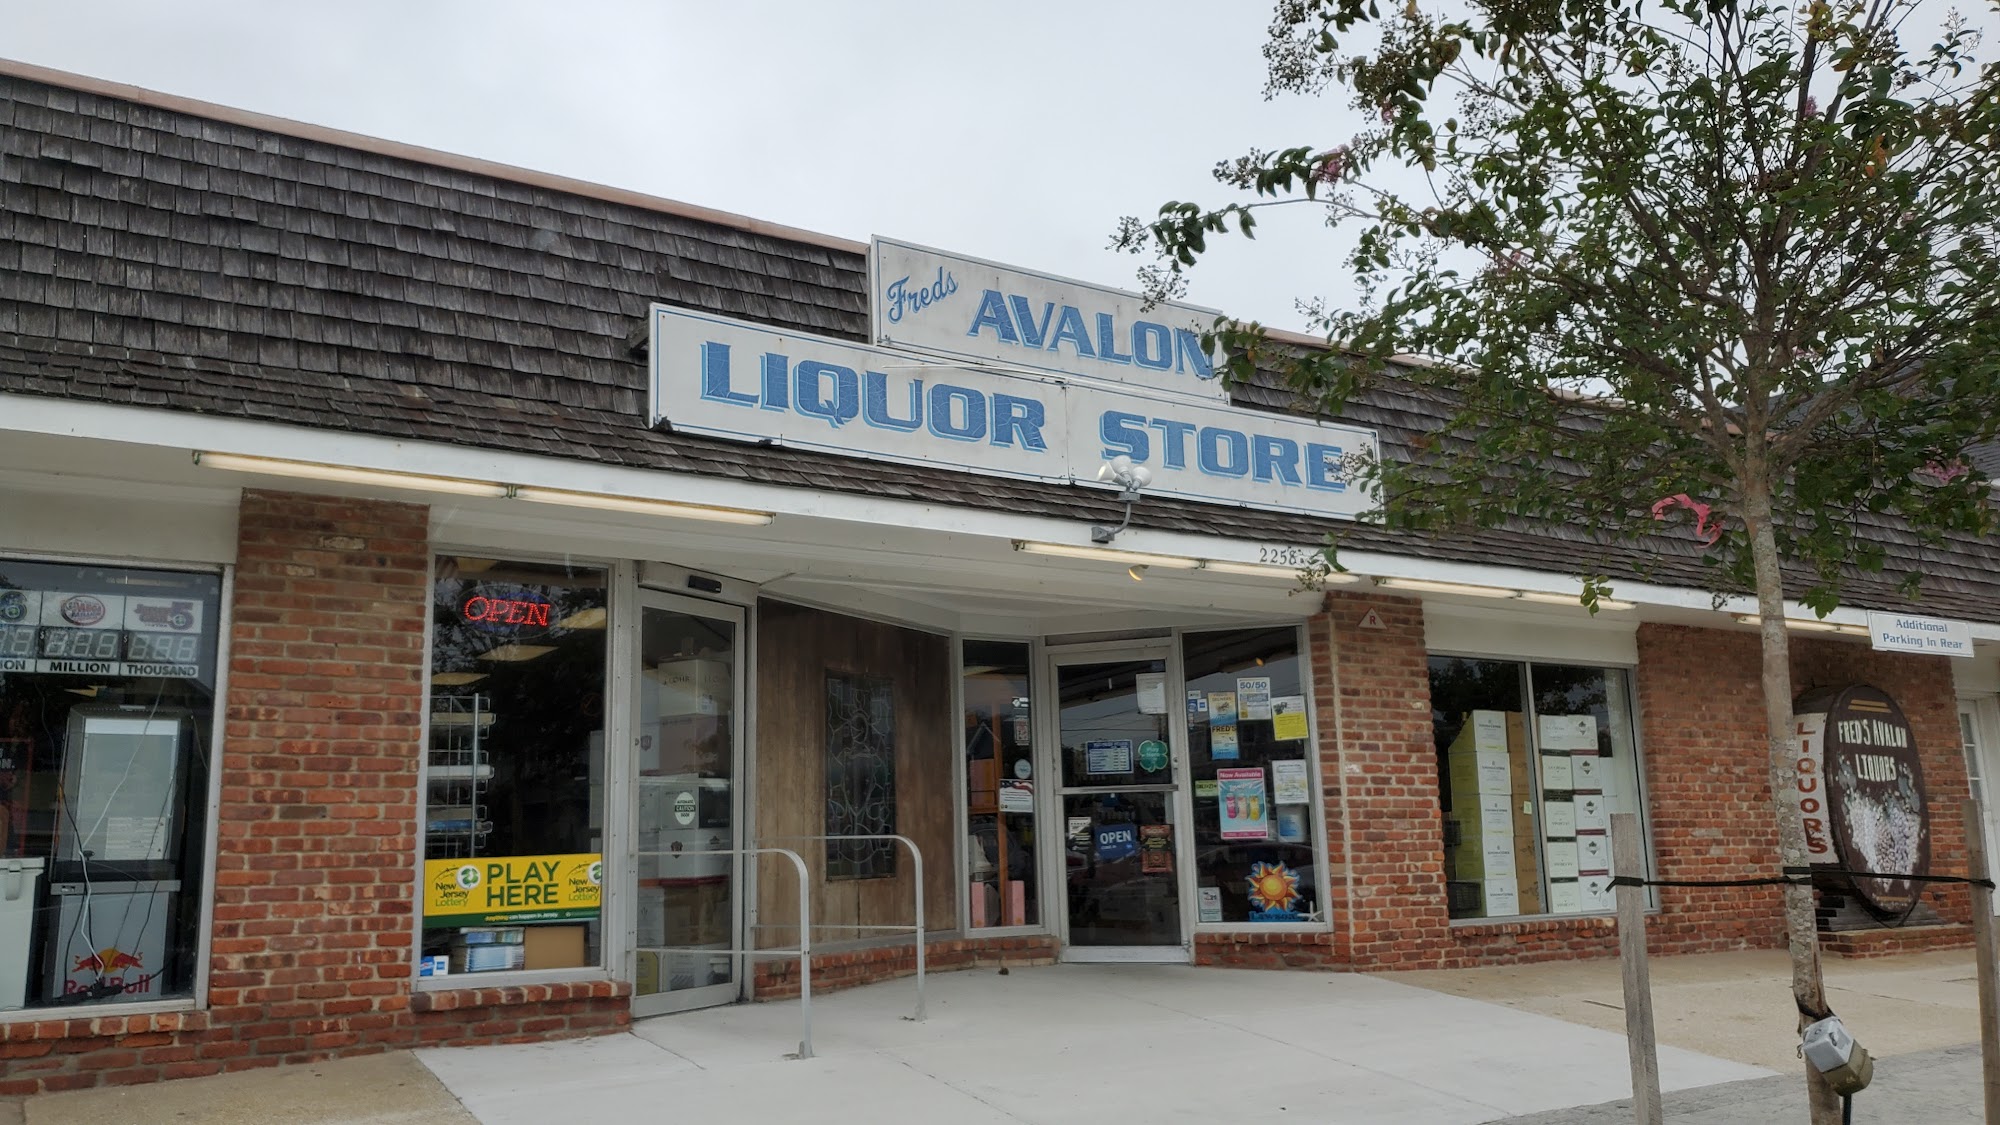 Fred's Avalon Liquors